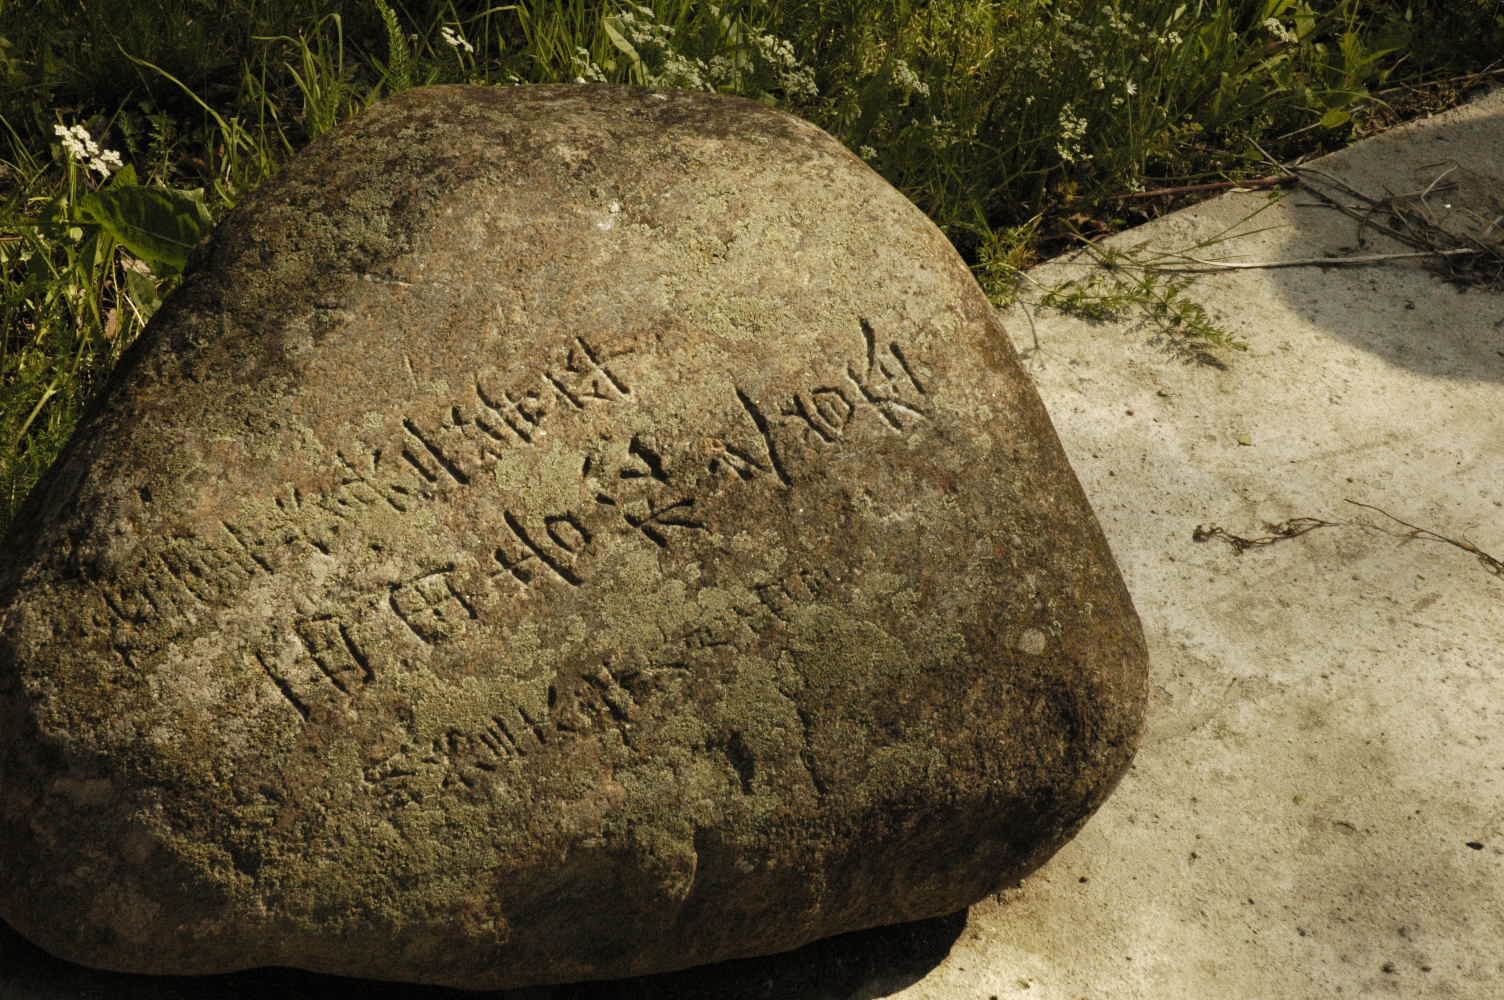 Какие слова написаны на камне